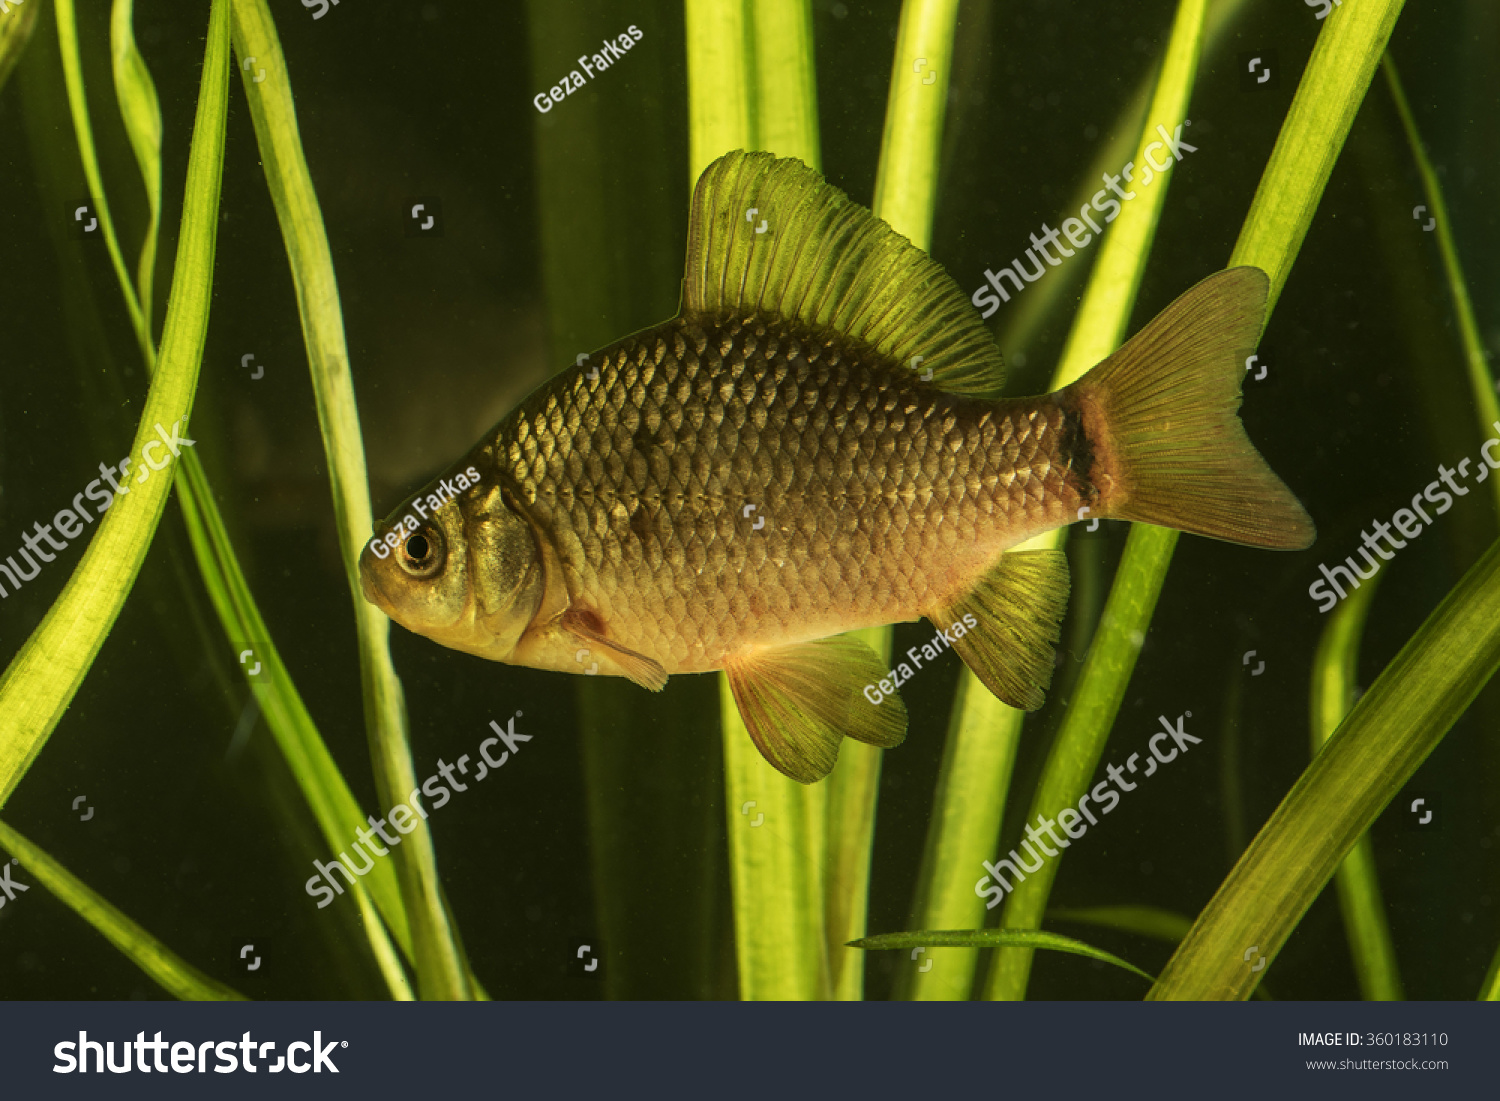 Crucian carp fish swimming  in the pond #360183110